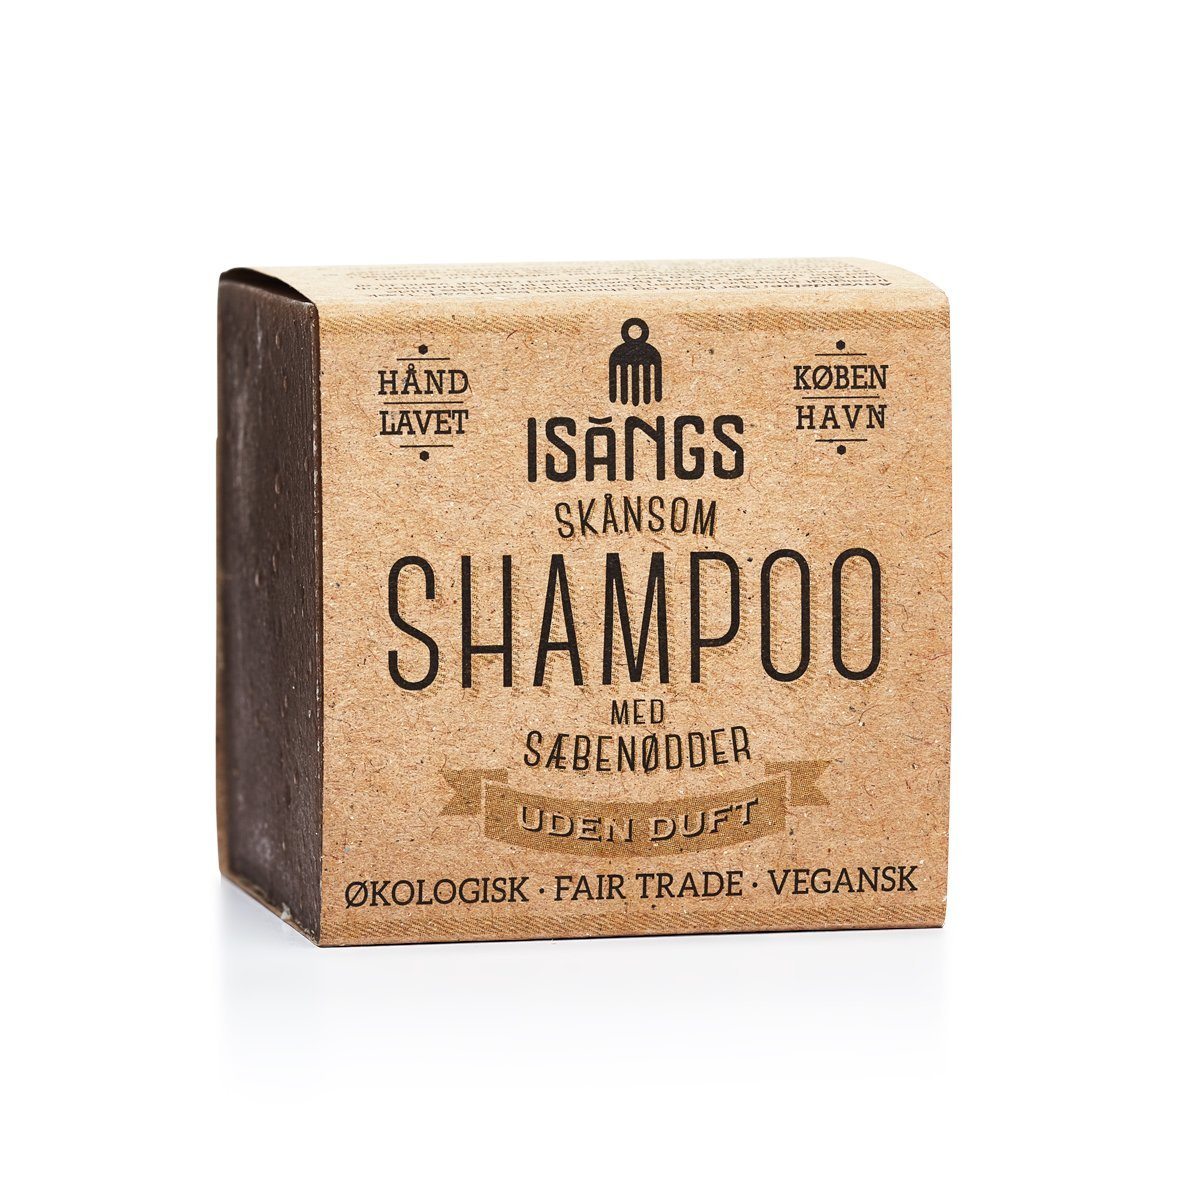 Skånsom shampoo sæbenødder fra Isangs Hair Body, uden – Gågrøn